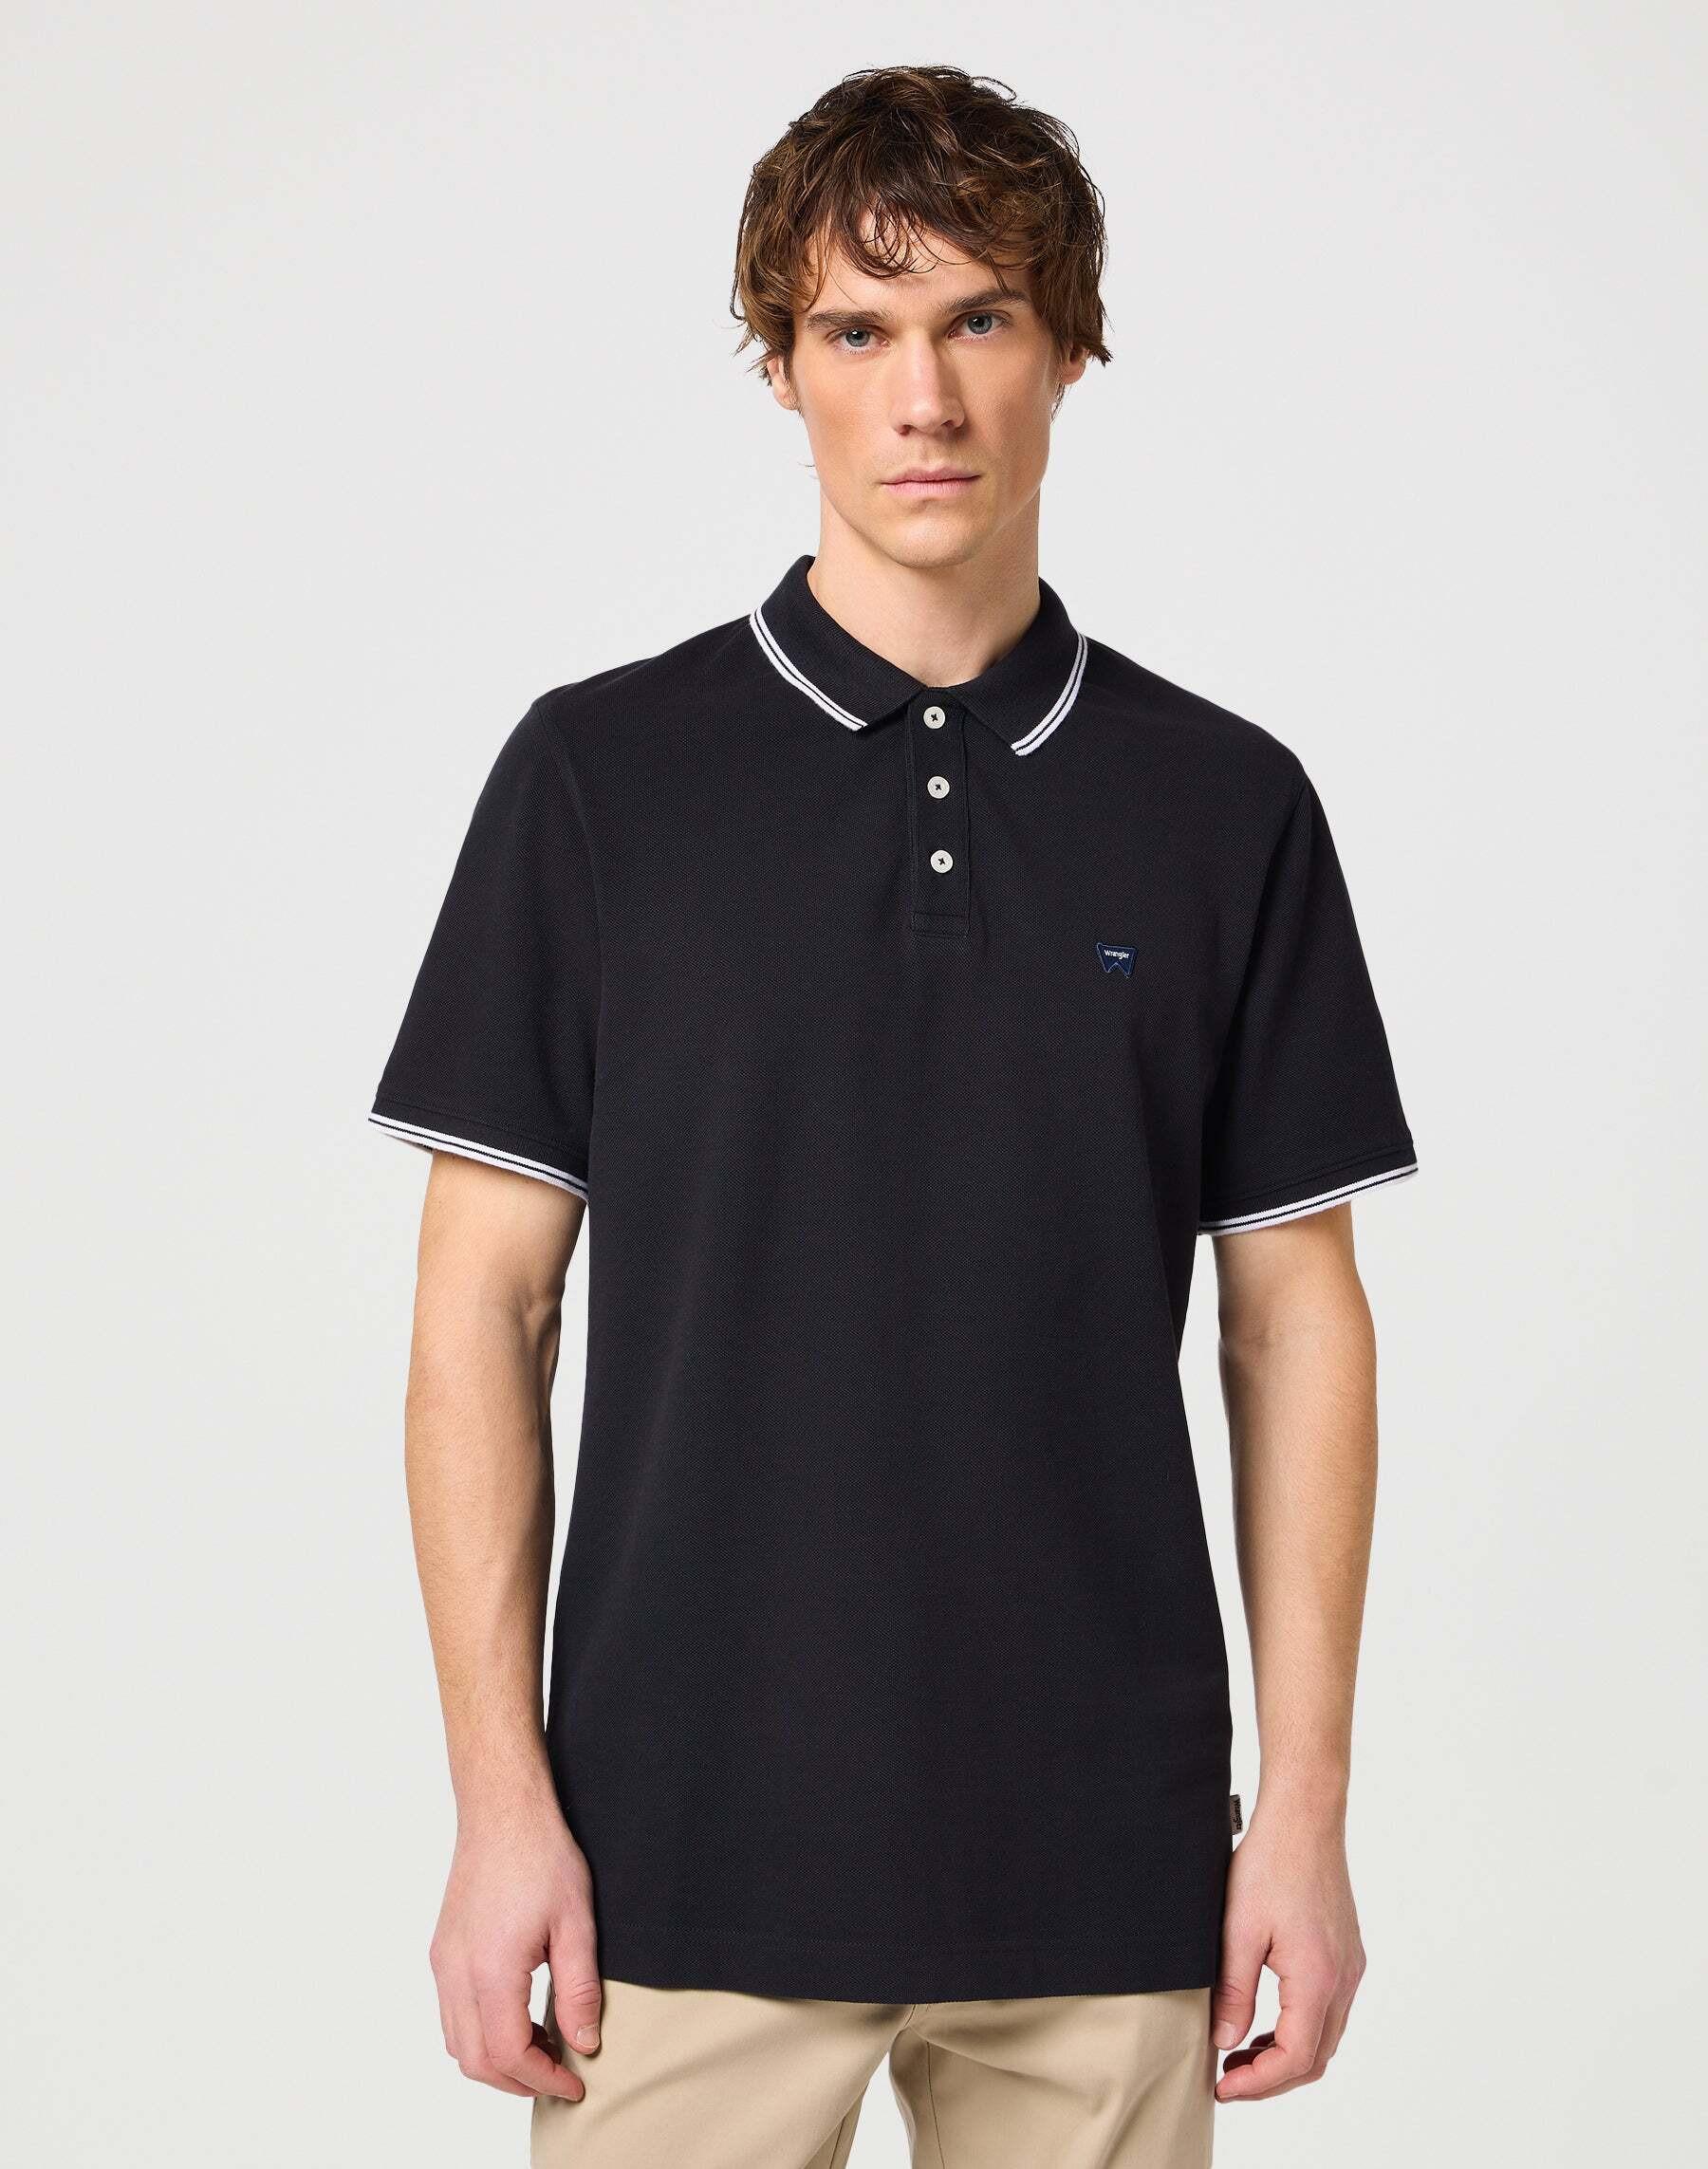 Polos Polo Shirt Herren Schwarz XL von Wrangler